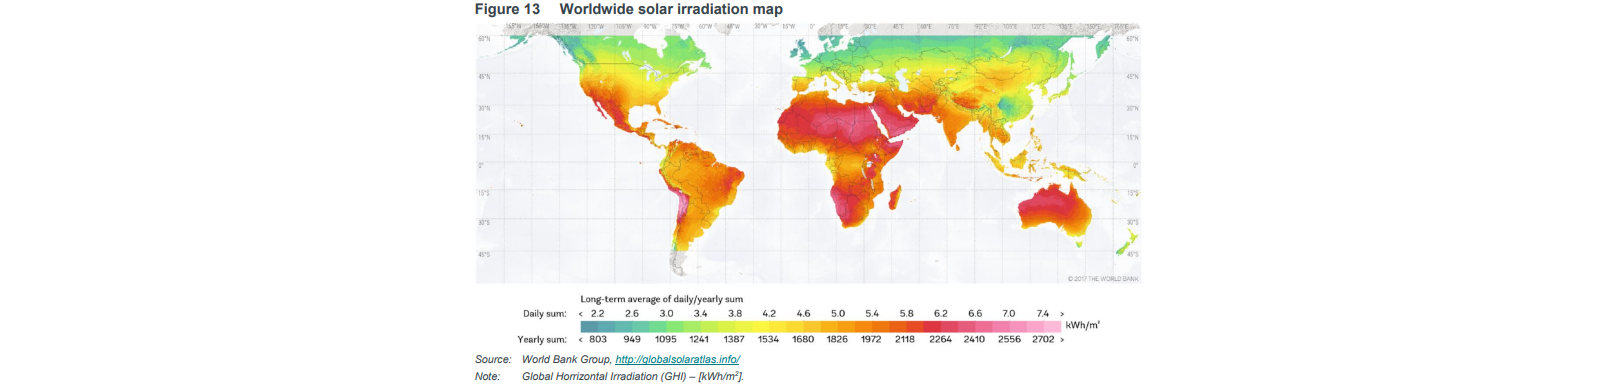 Worldwide solar irradiation map